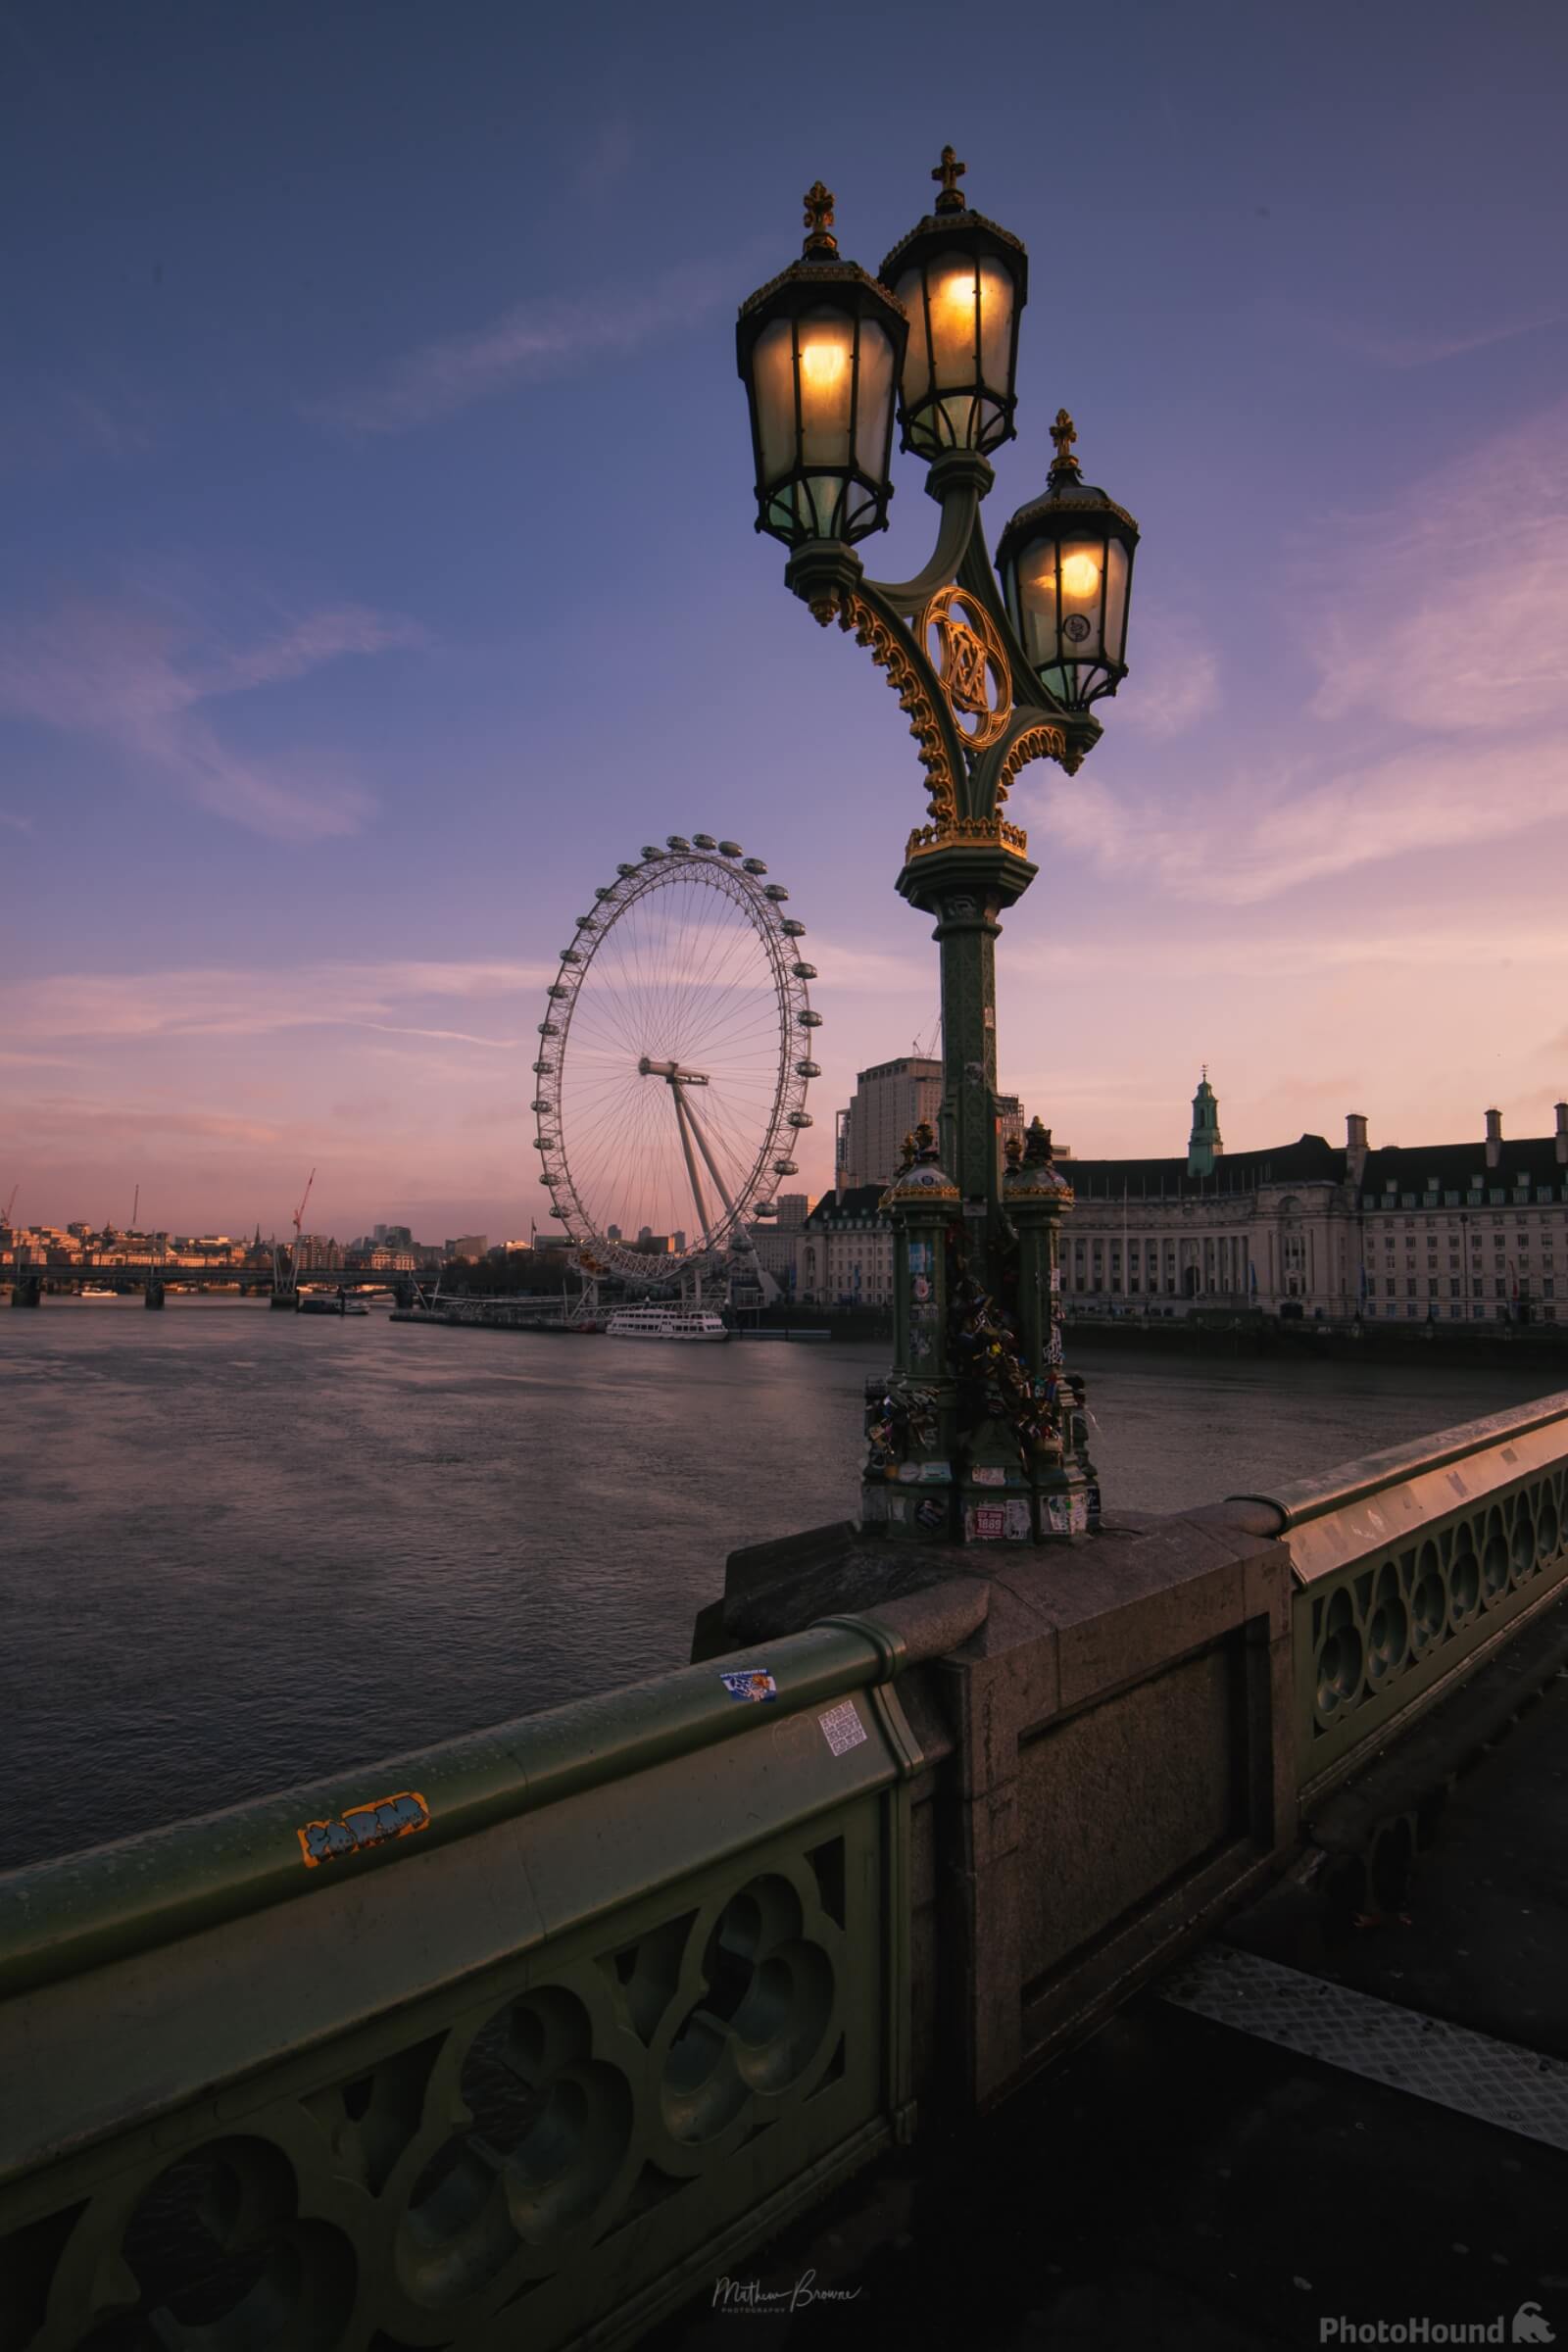 Image of Westminster Bridge by Mathew Browne